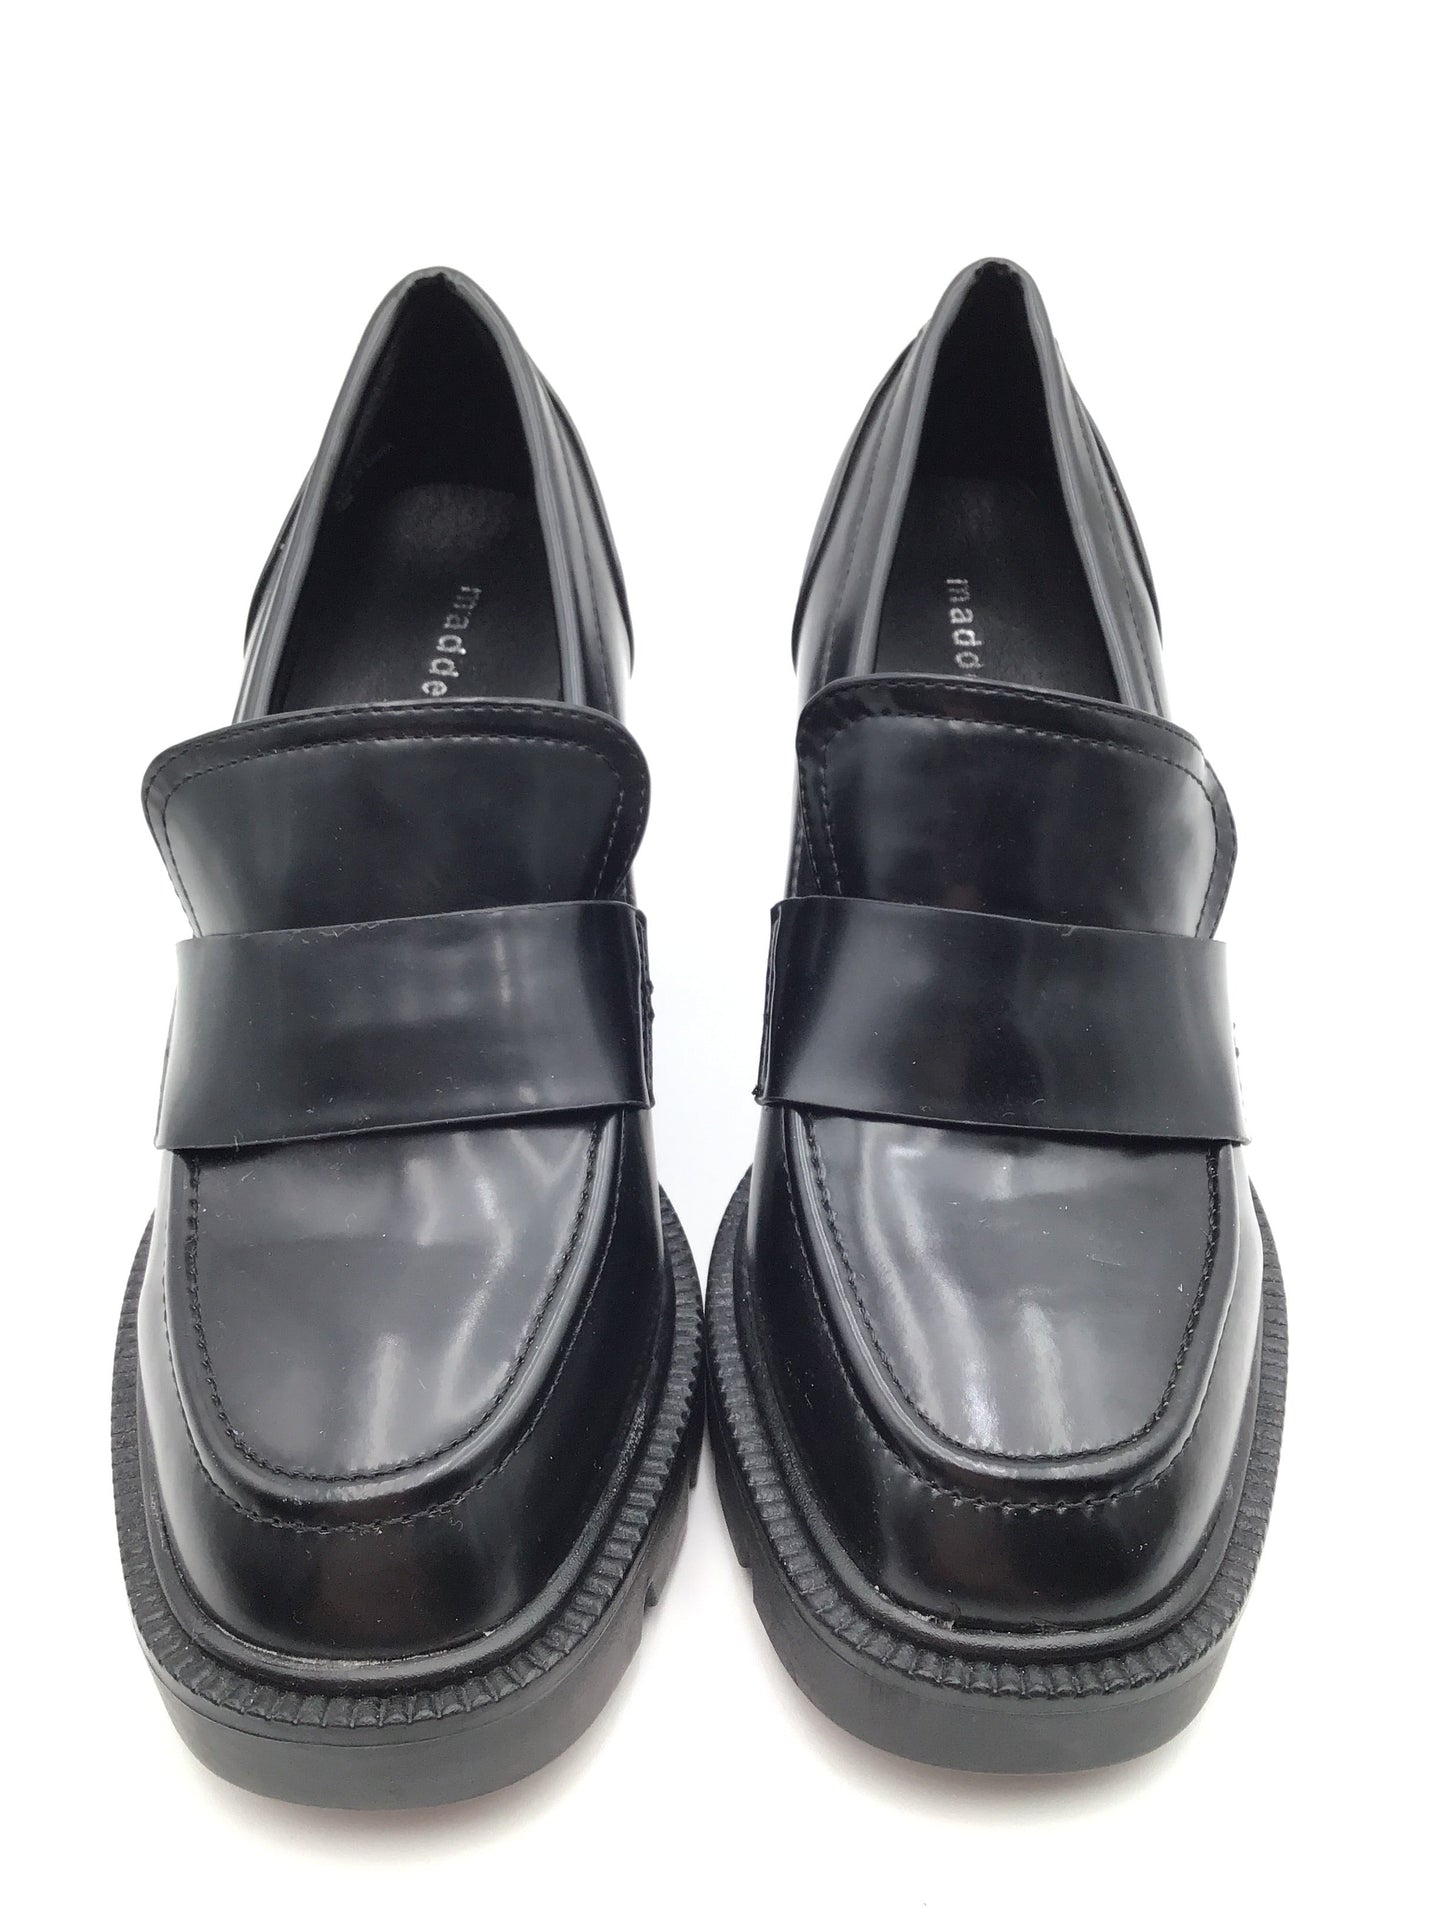 Black Shoes Heels Block Madden Girl, Size 8.5